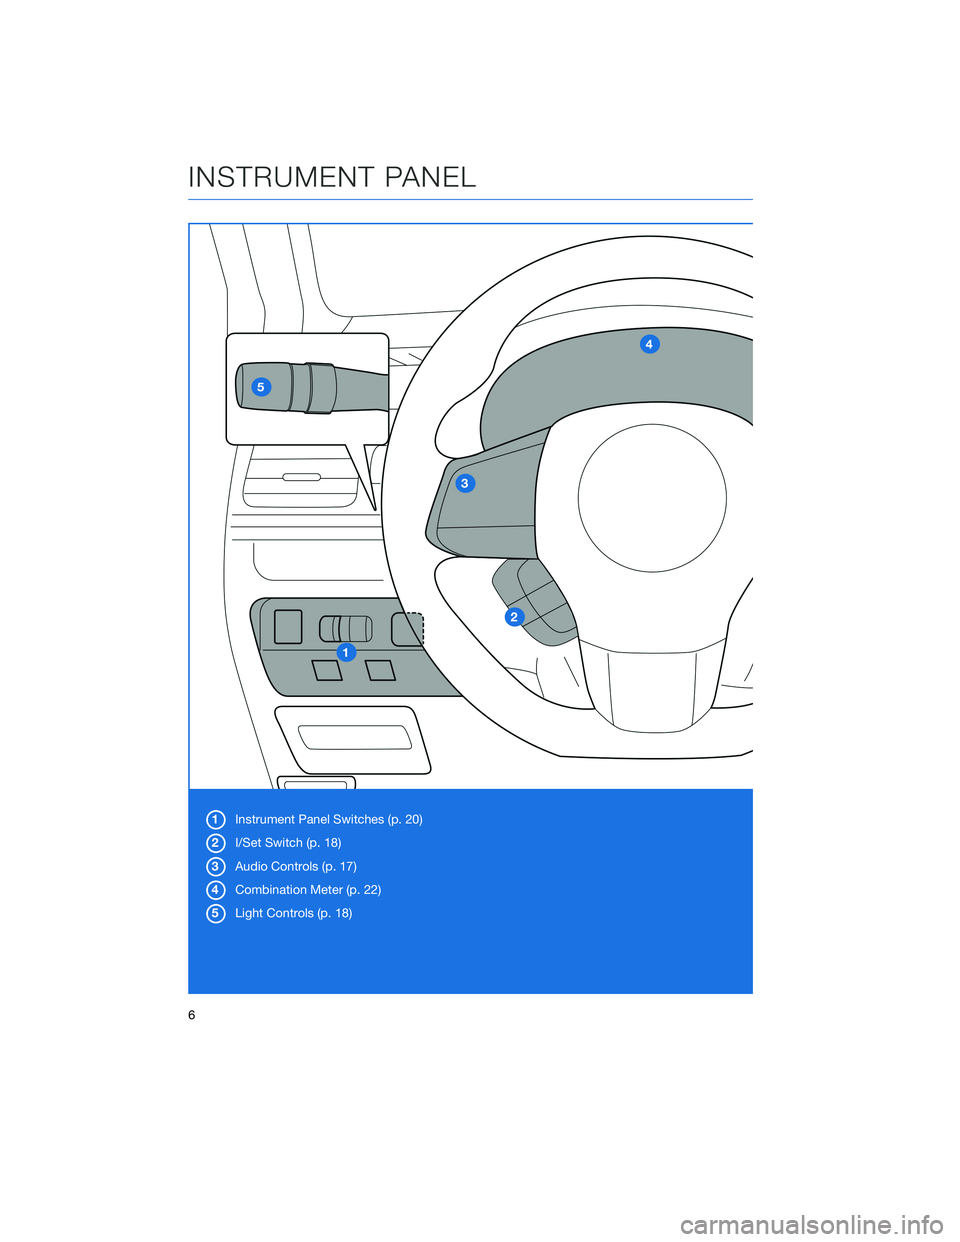 SUBARU WRX 2020  Quick Guide 1Instrument Panel Switches (p. 20)
2I/Set Switch (p. 18)
3Audio Controls (p. 17)
4Combination Meter (p. 22)
5Light Controls (p. 18)
INSTRUMENT PANEL
6 